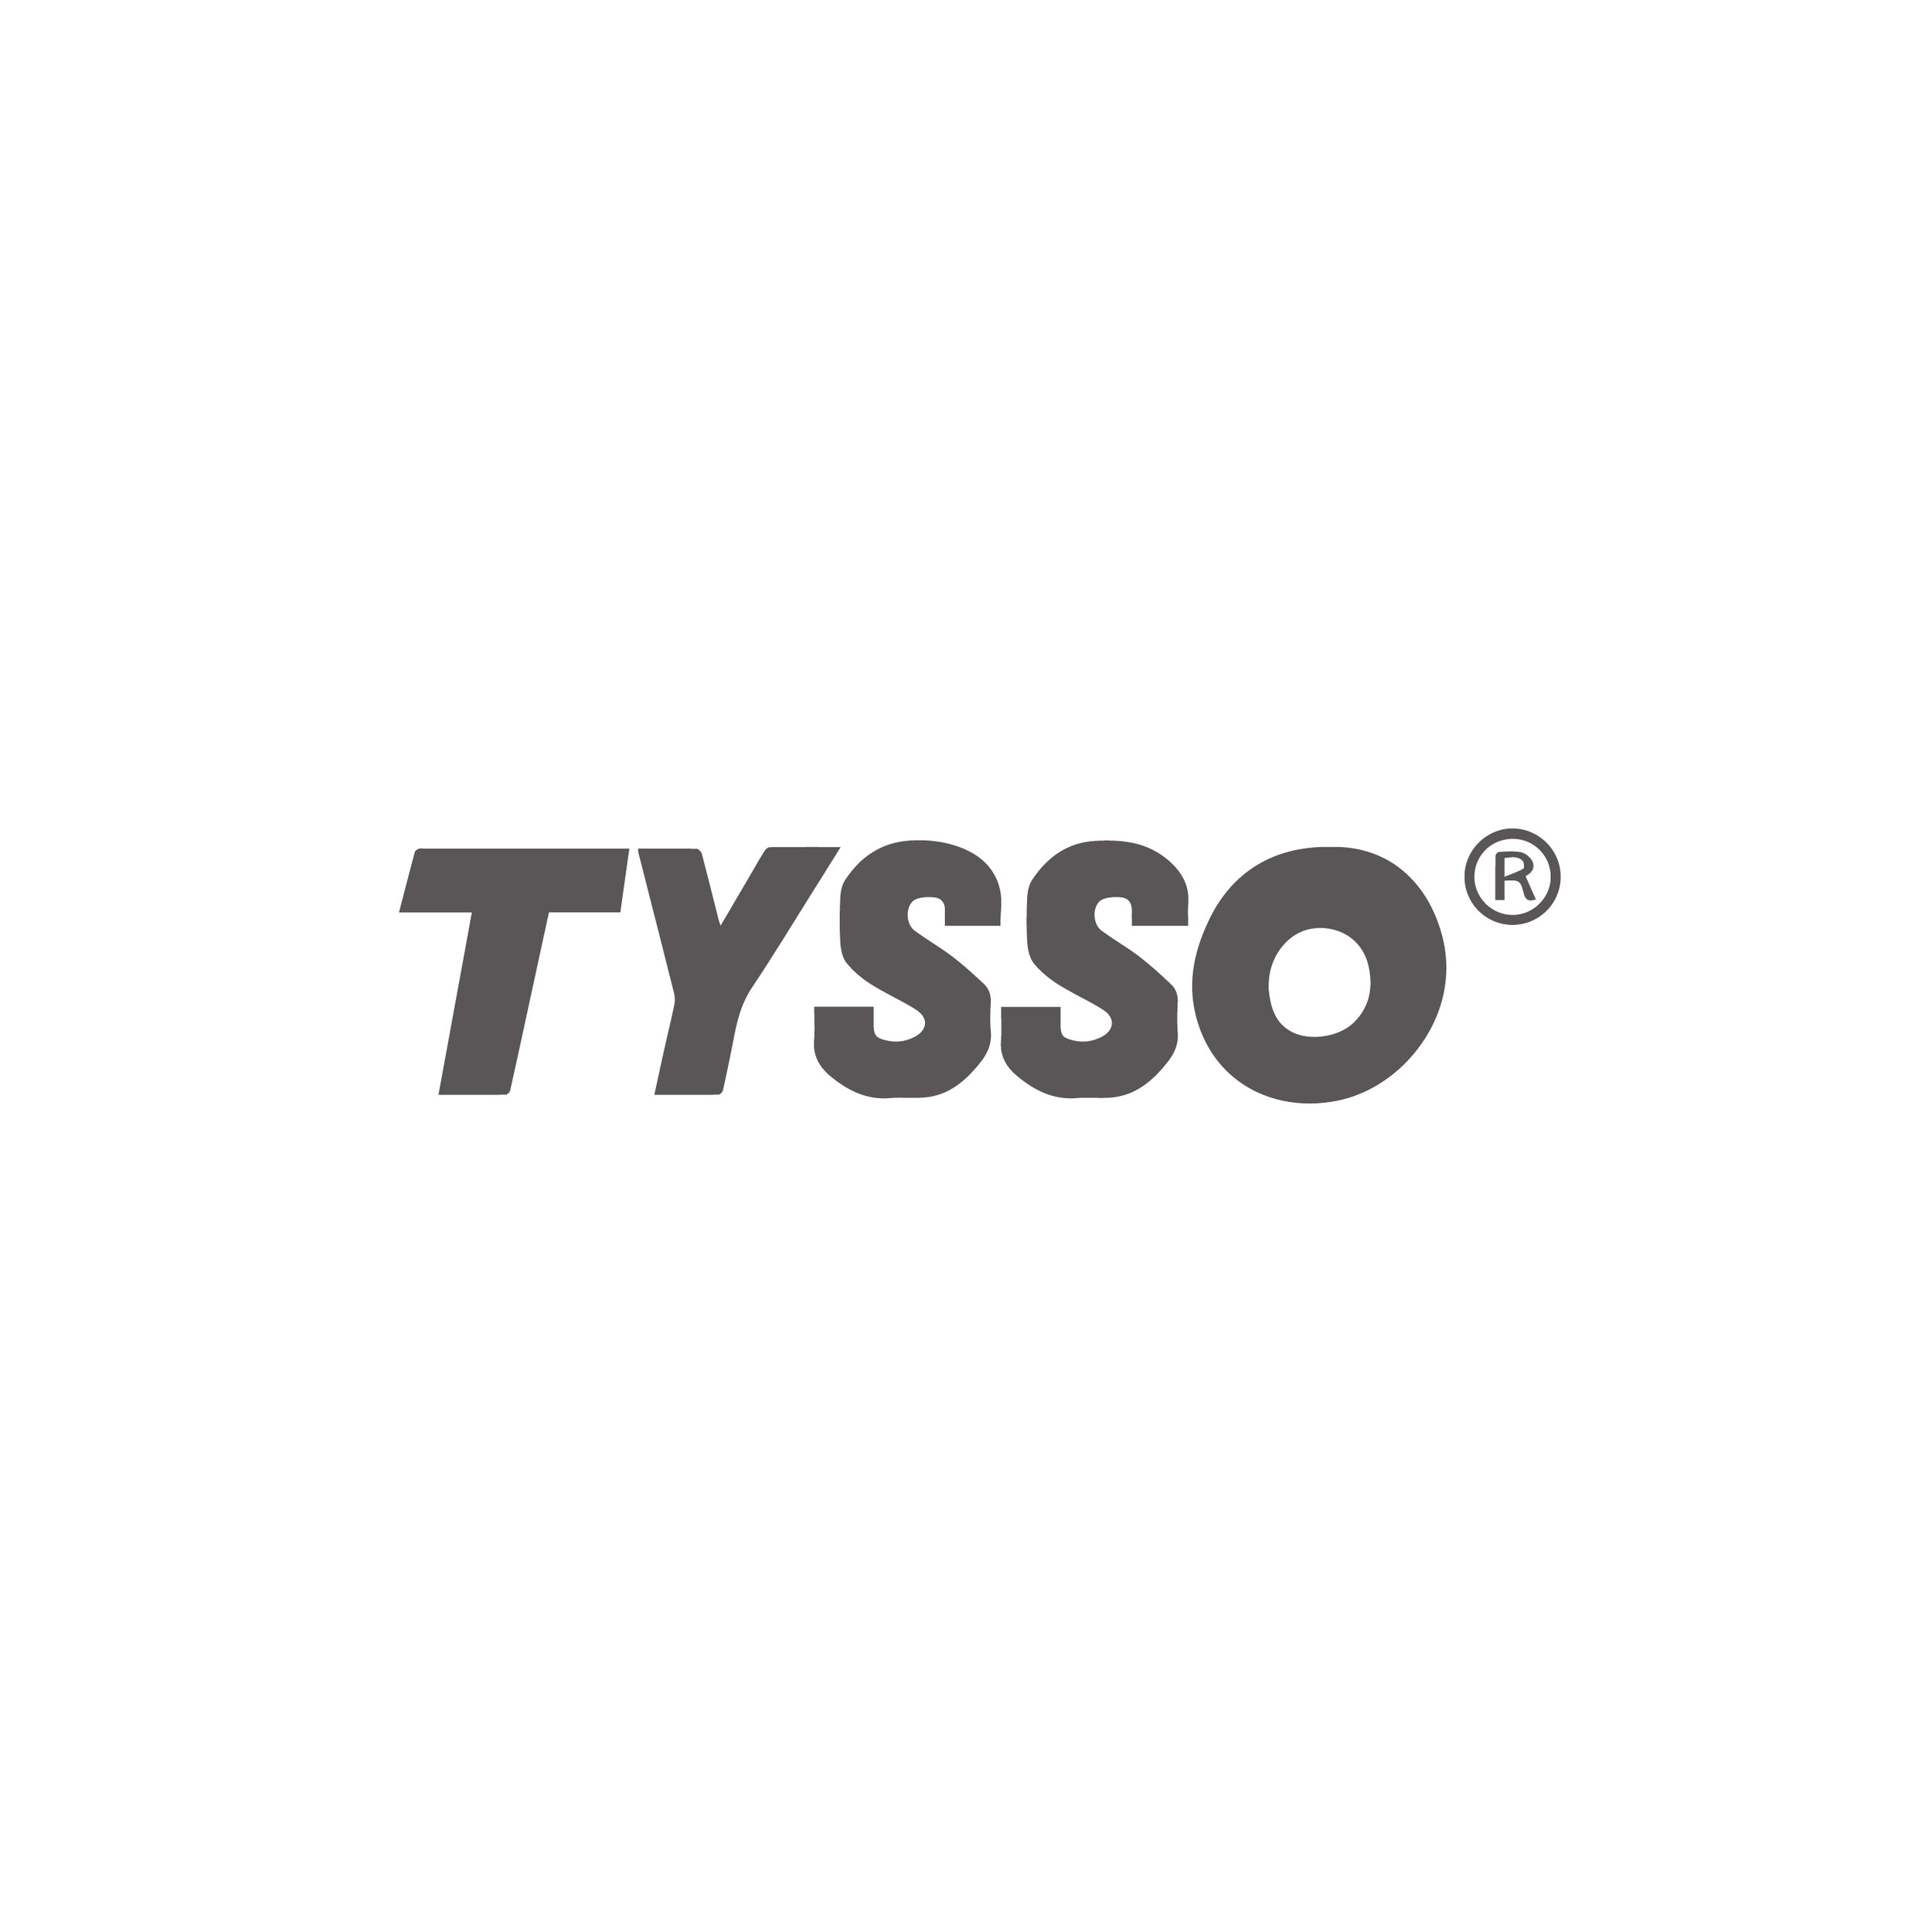 TYSSO.jpg